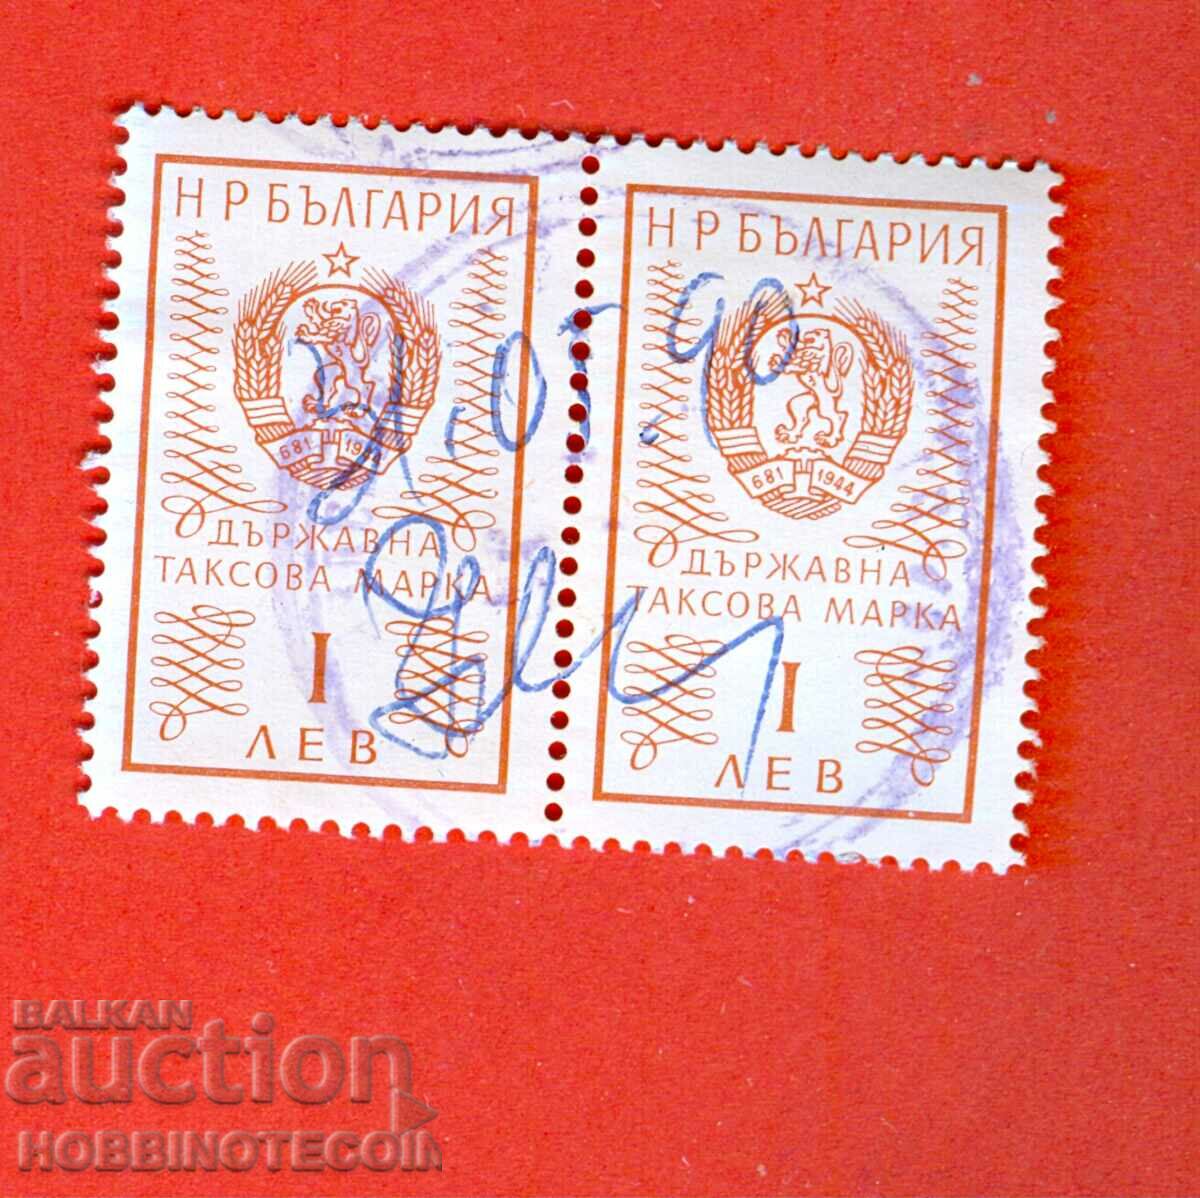 NR BULGARIA STATE TAX STAMP 2 x 1.00 - 1 Lev - 1972